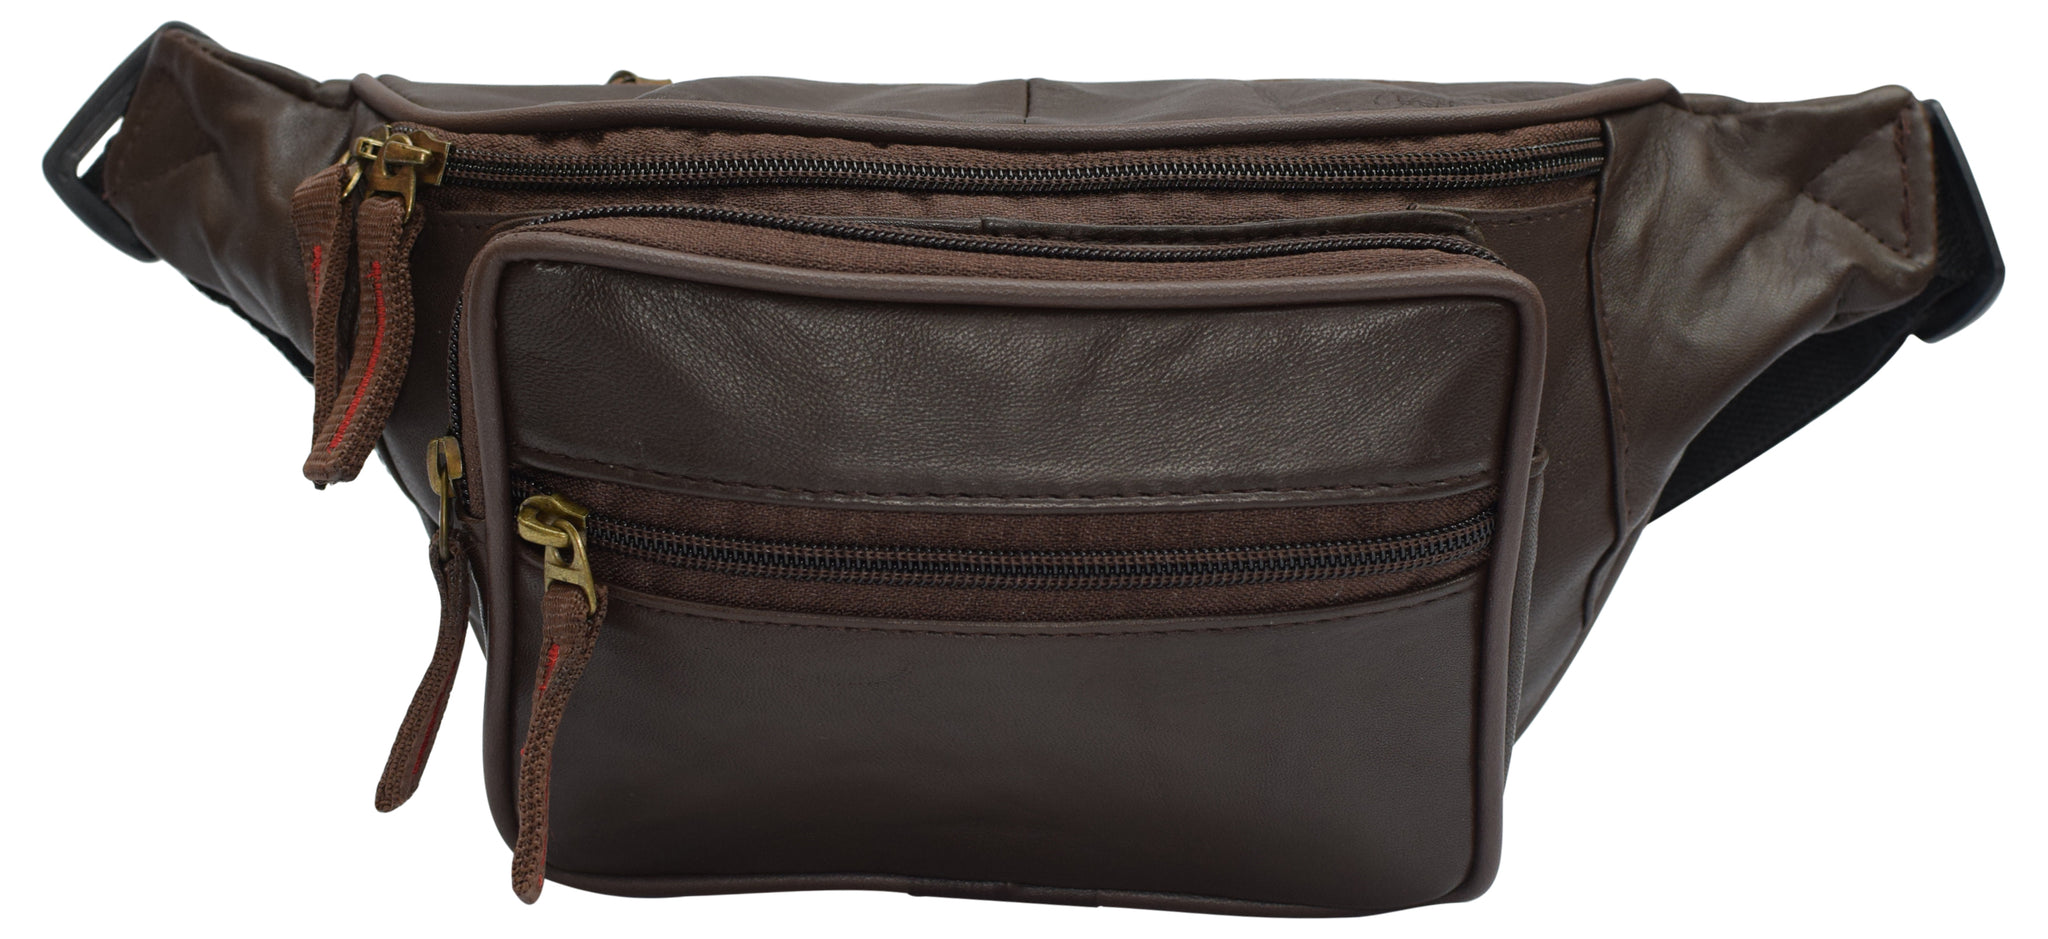 Light Brown Leather Fanny Pack Adjustable Strap Travel Hip Bum bag Purse  wallet